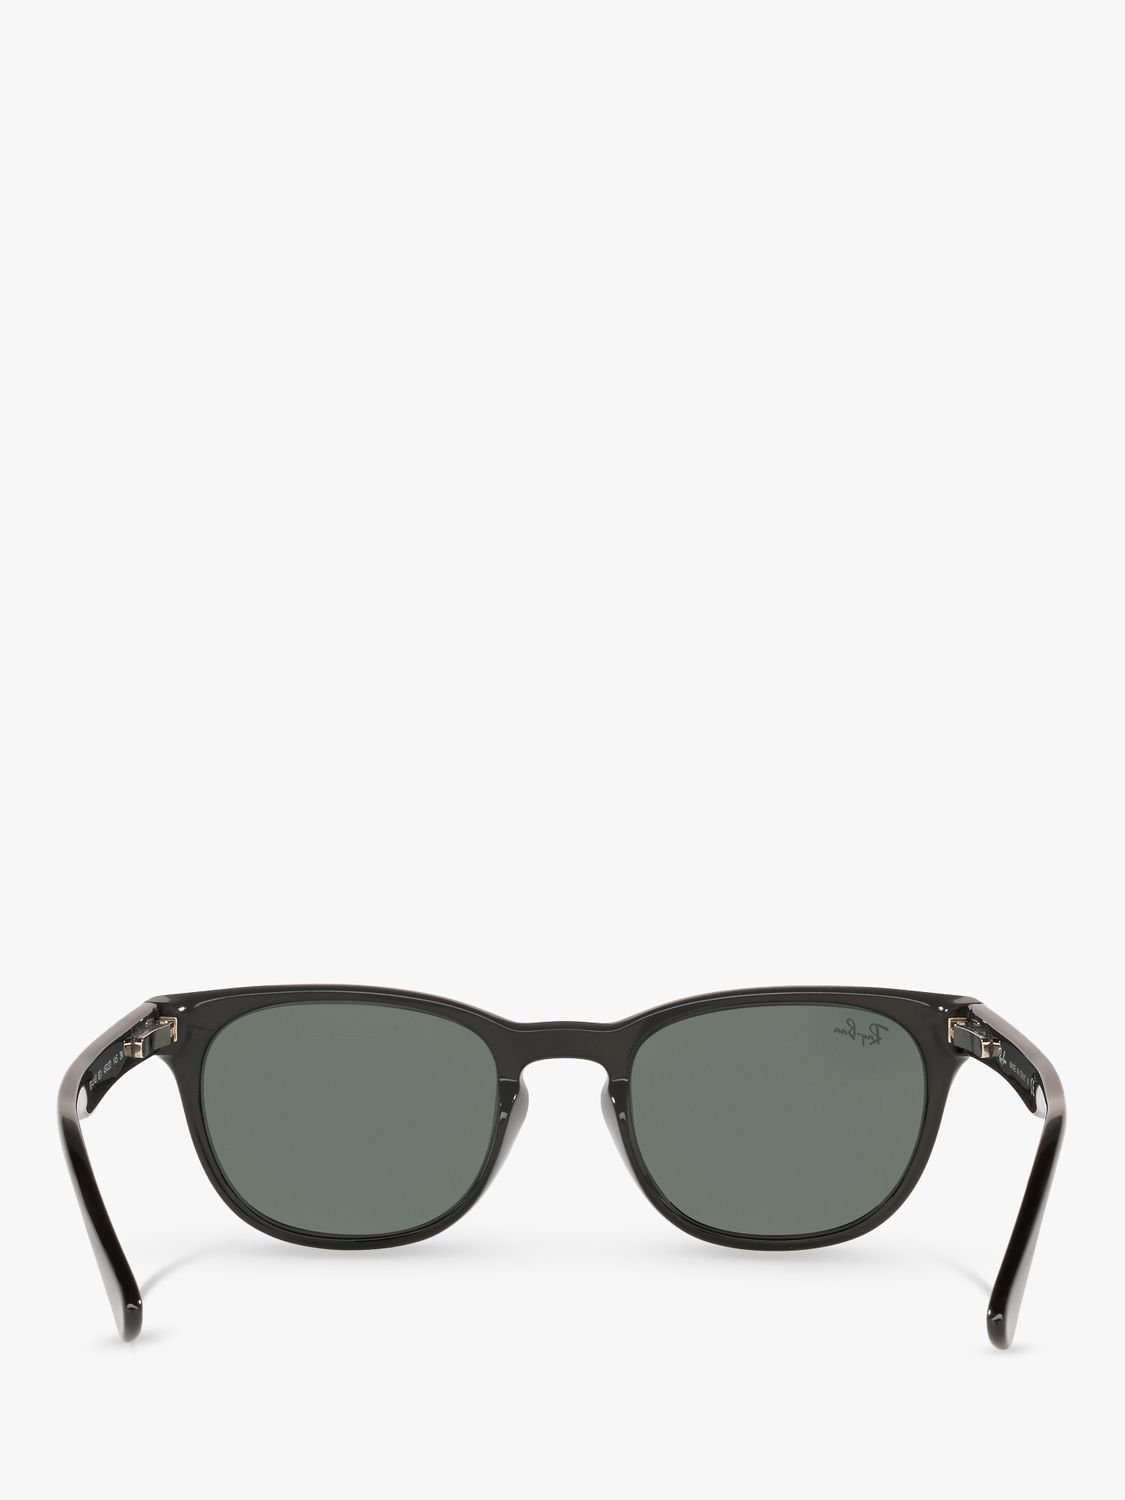 Ray-Ban RB4140 Women's Square Sunglasses, Black/Grey